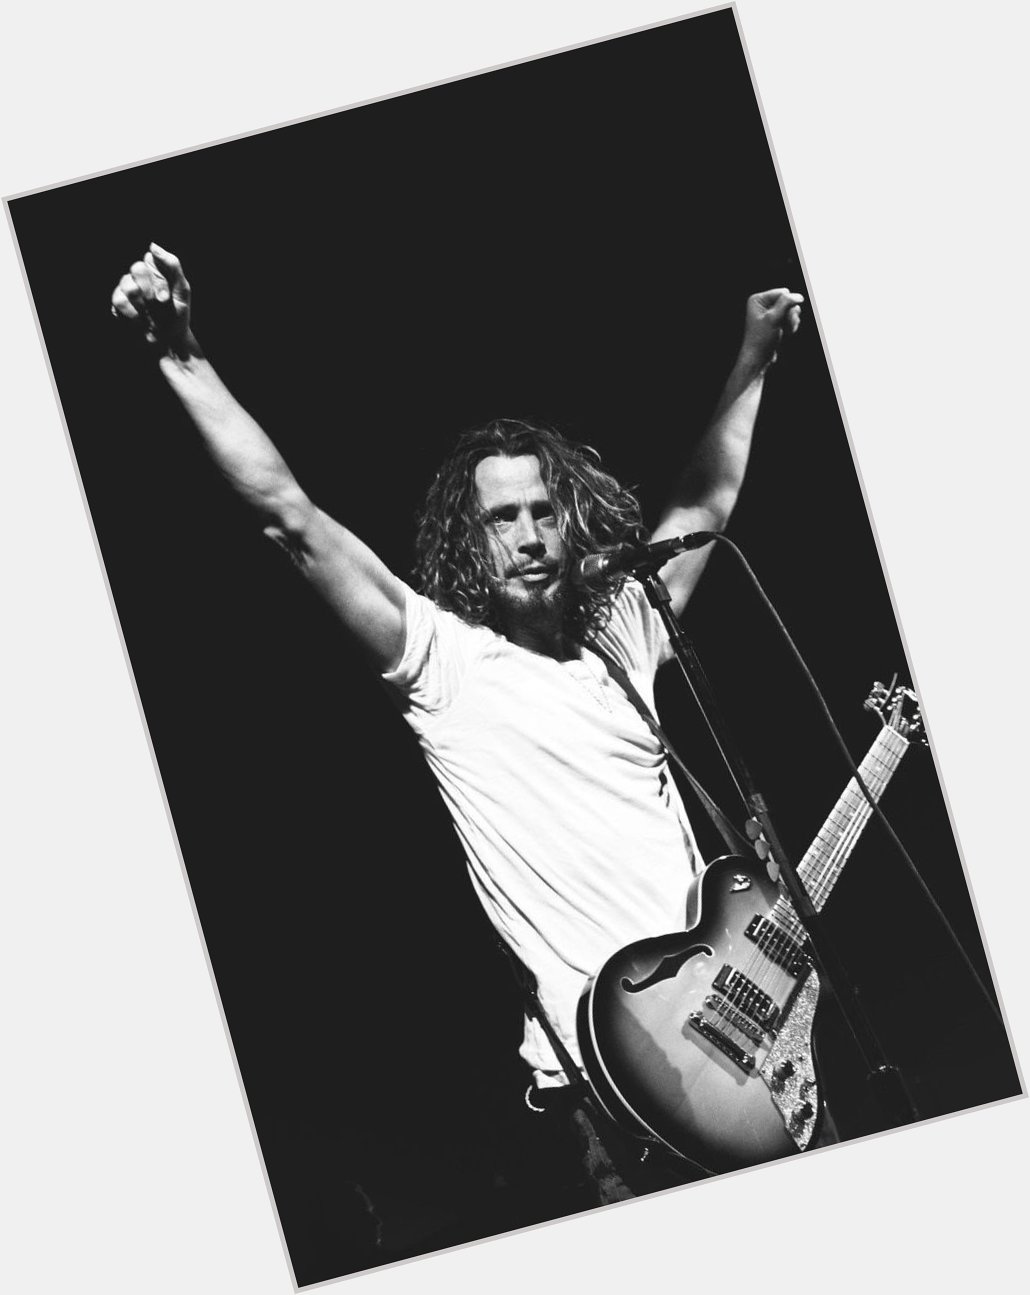 Happy birthday, Chris Cornell.
Still so missed   